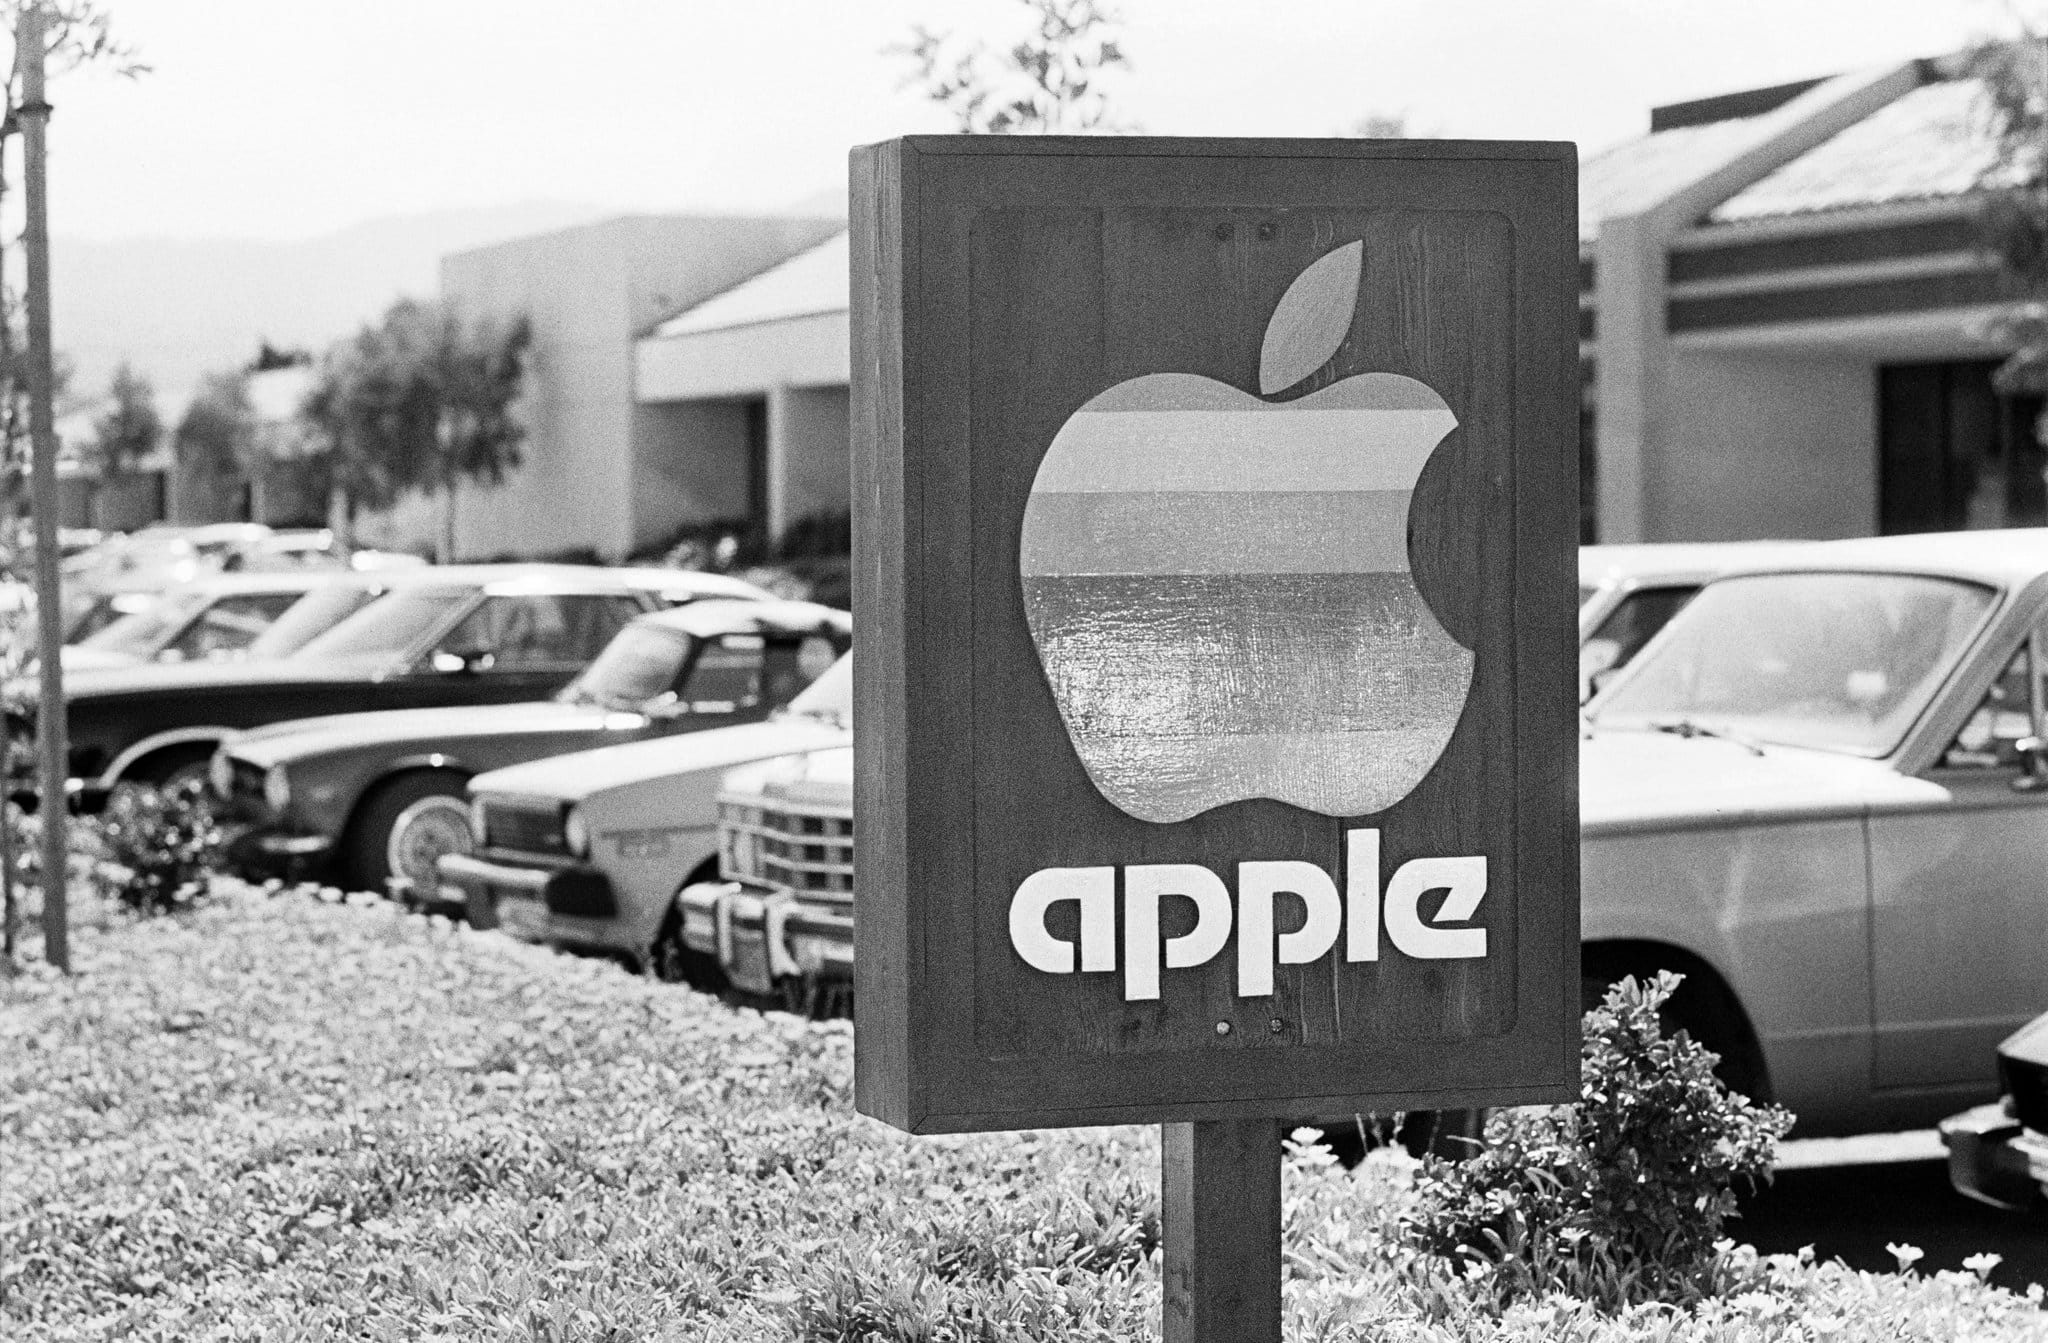 Apple's headquarters in Cupertino in 1980